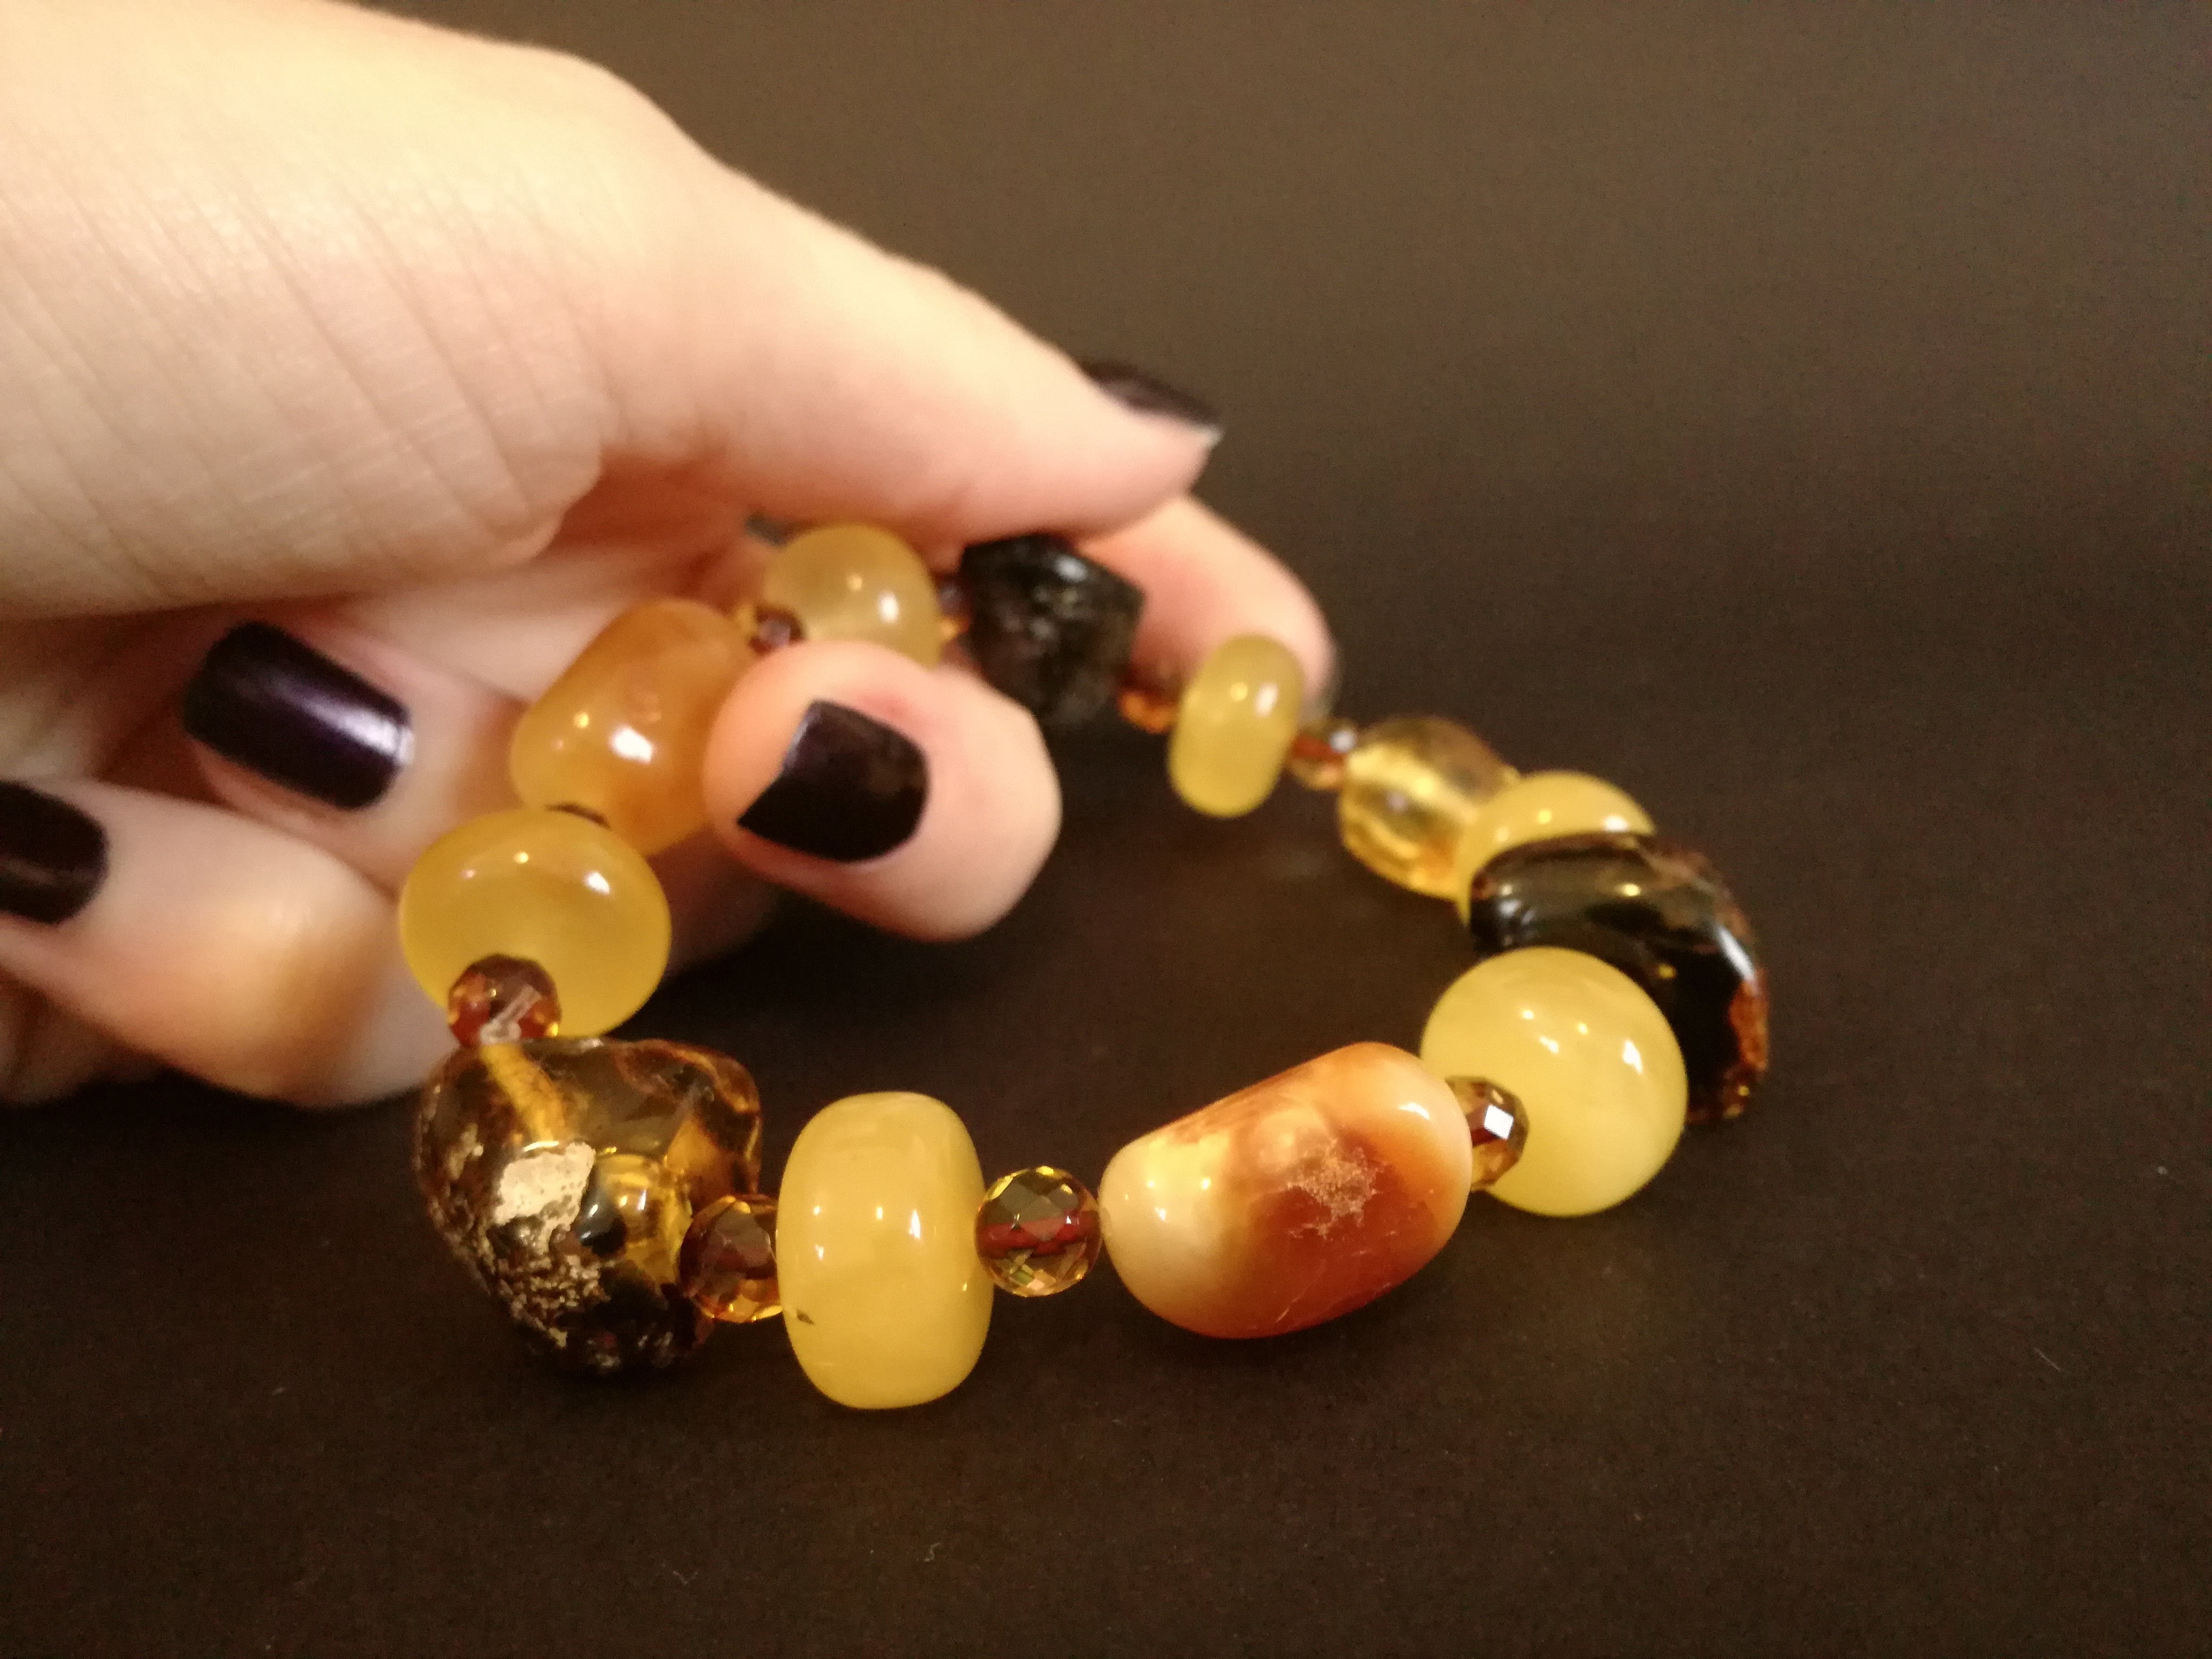 Genuine Handmade Amber Bracelet in Hand, Multicolor, medium Size, Small Faceted Beads, , For Her, Nursing Mums